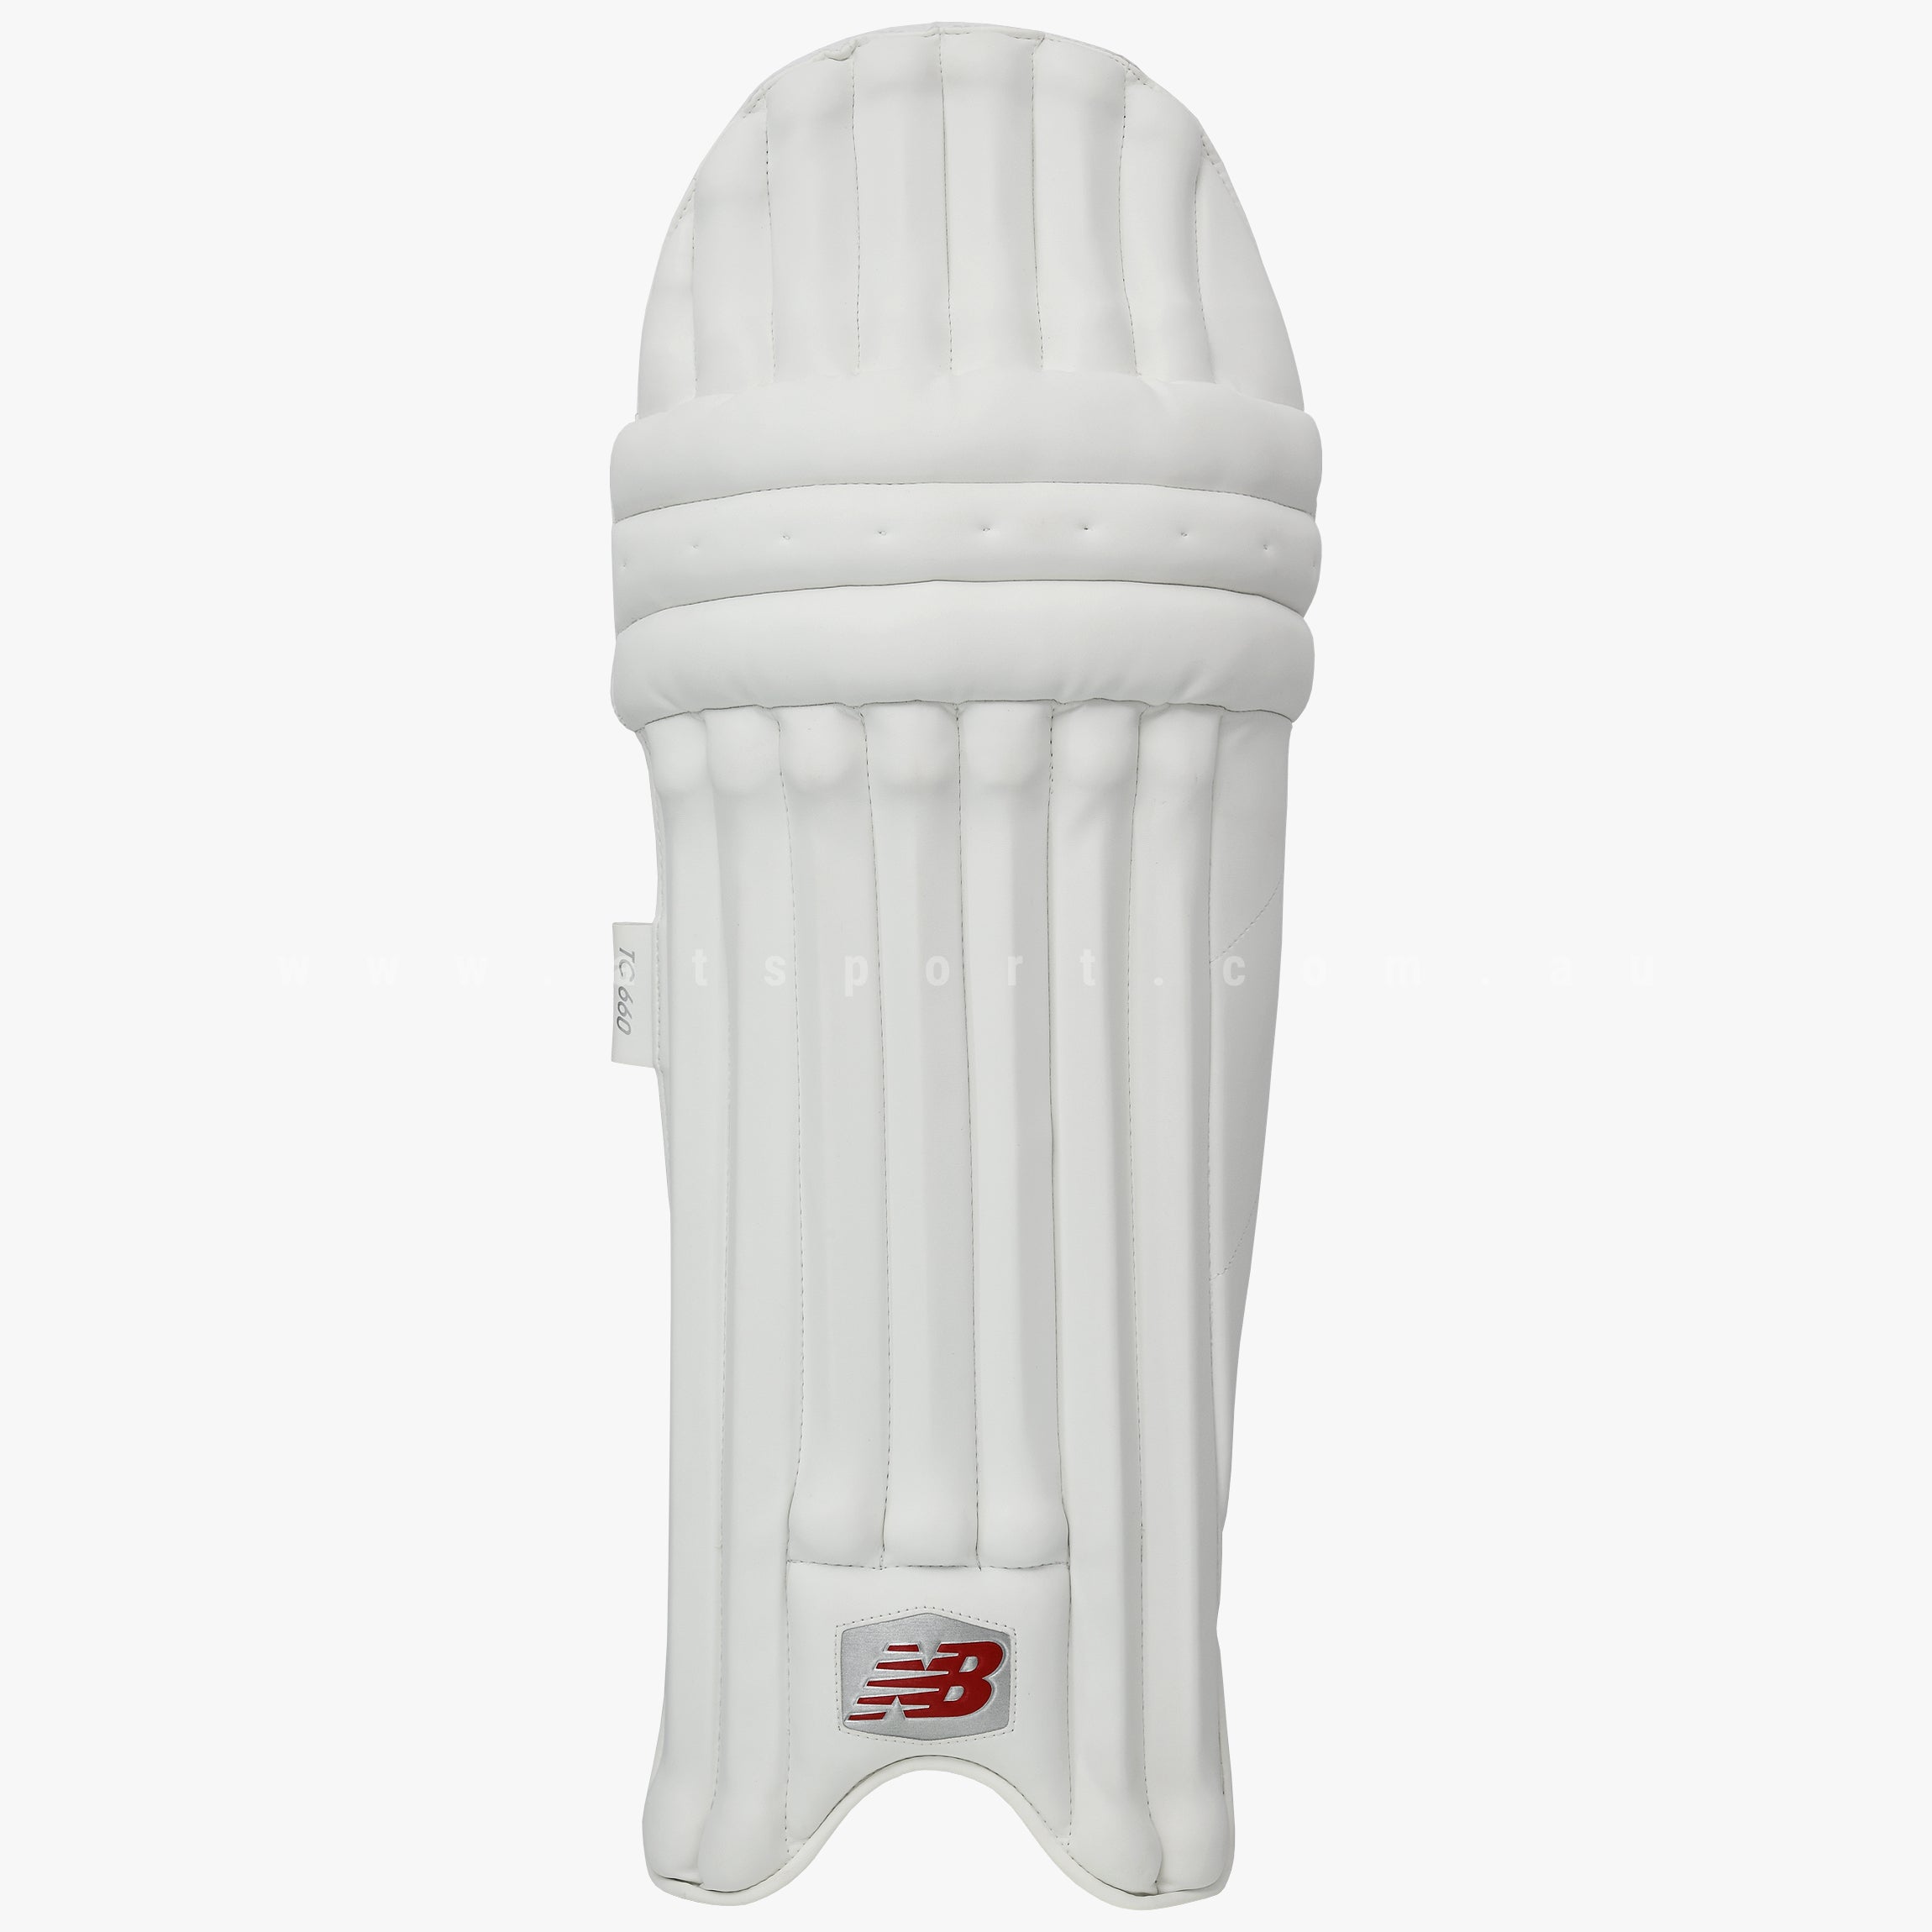 New Balance TC 660 2023 Cricket Batting Pads - SMALL ADULT